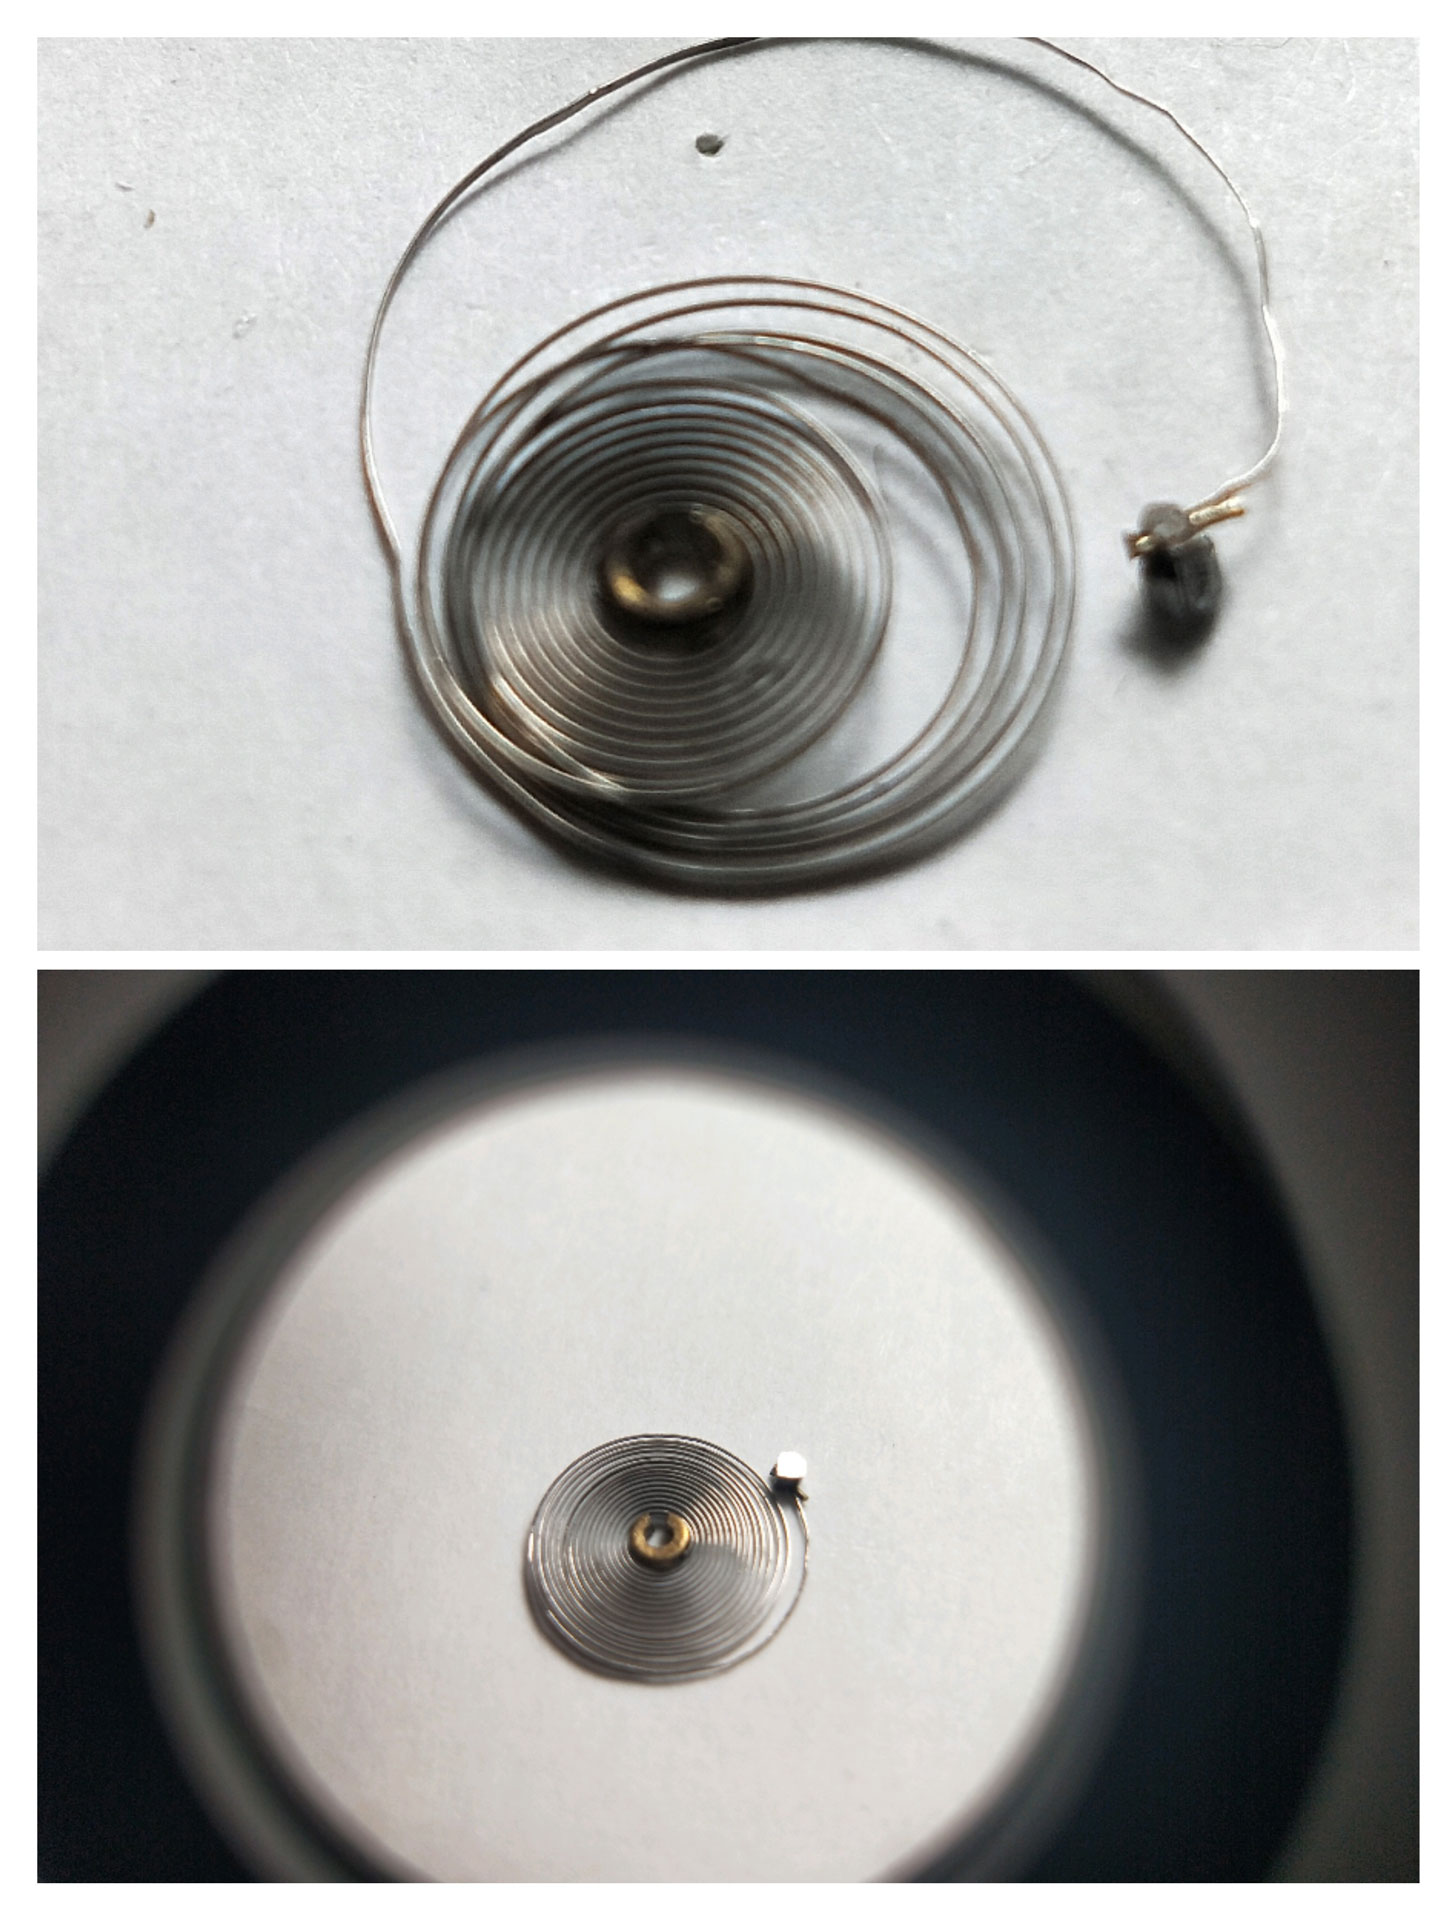 Reparación del espiral de un reloj saboneta, suizo principio XX